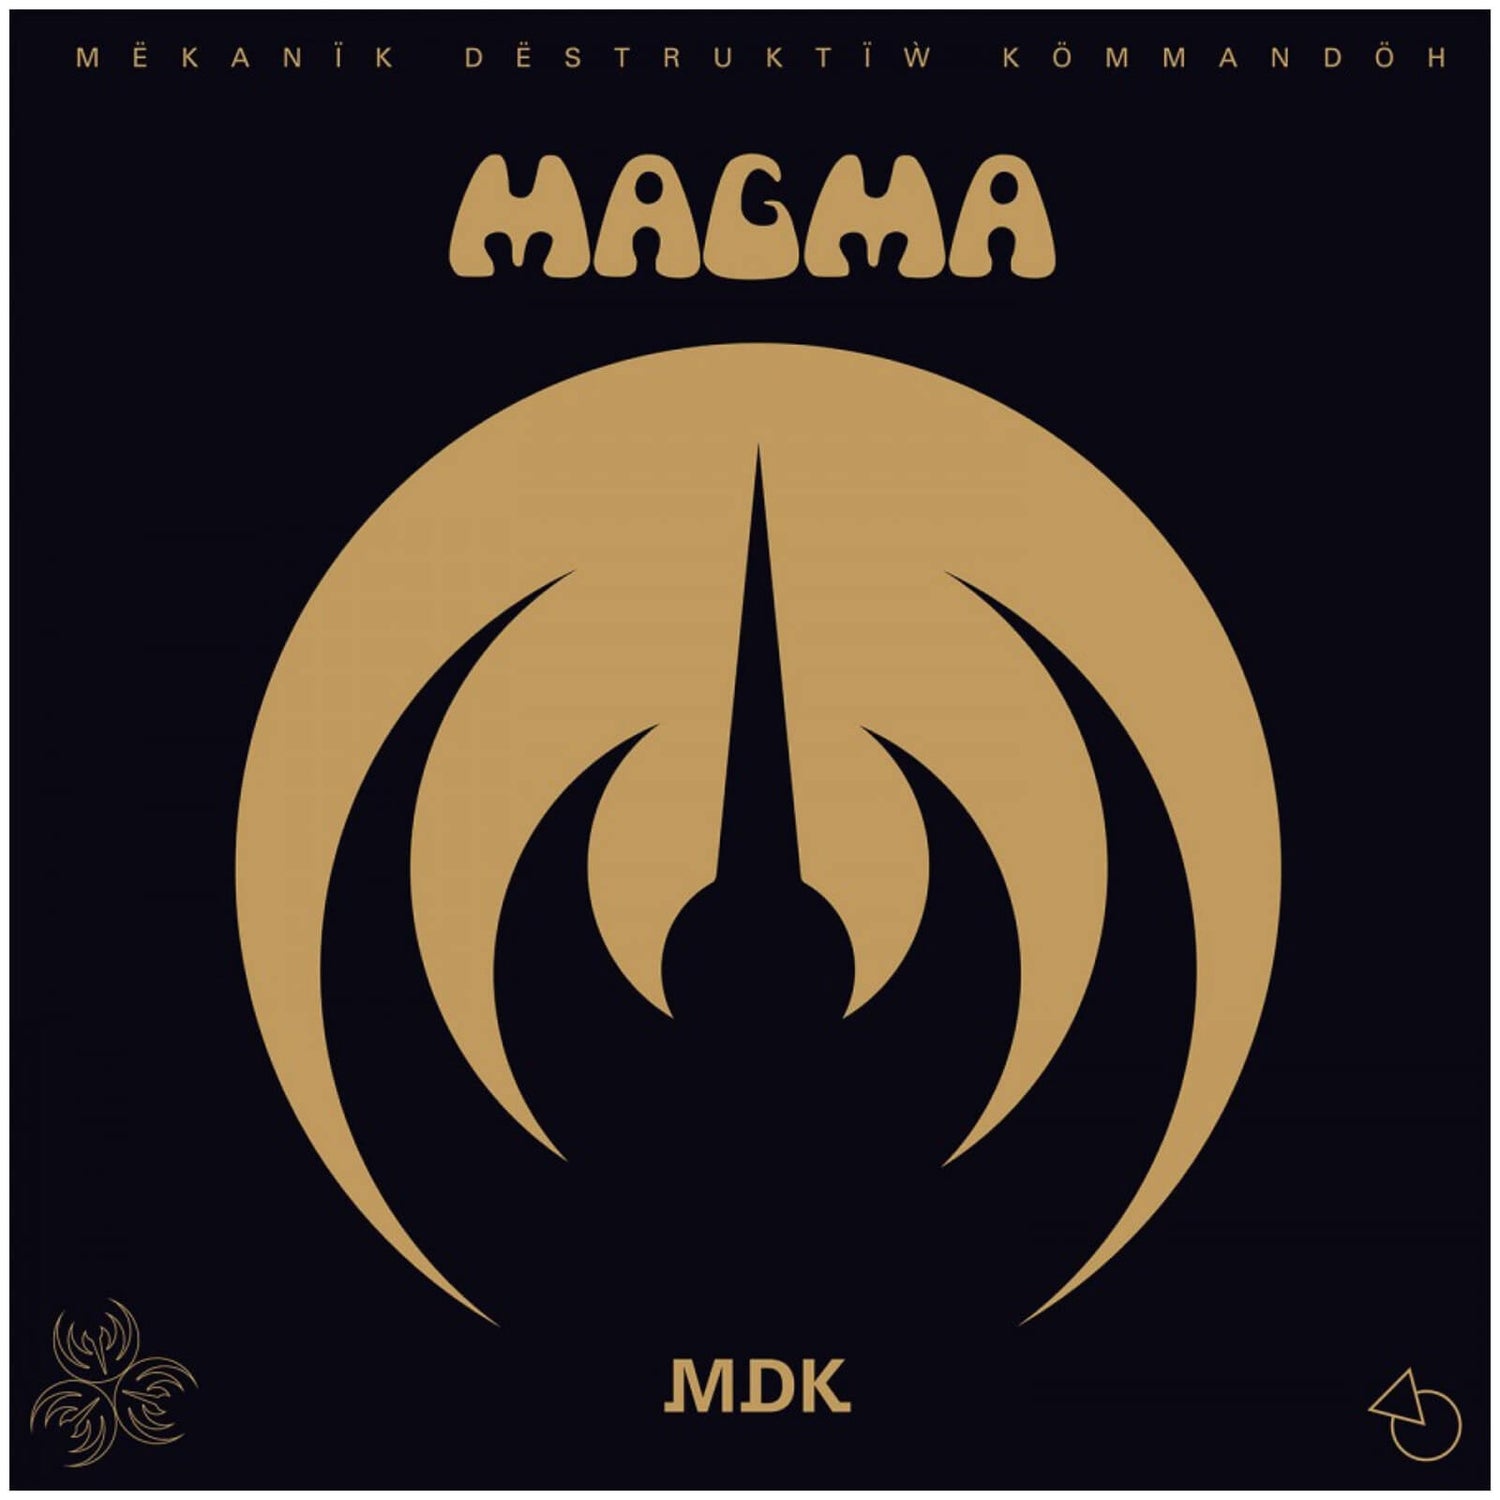 Magma - Mekanik Destruktiw Kommandoh (MDK) 180g Vinyl (Copper)